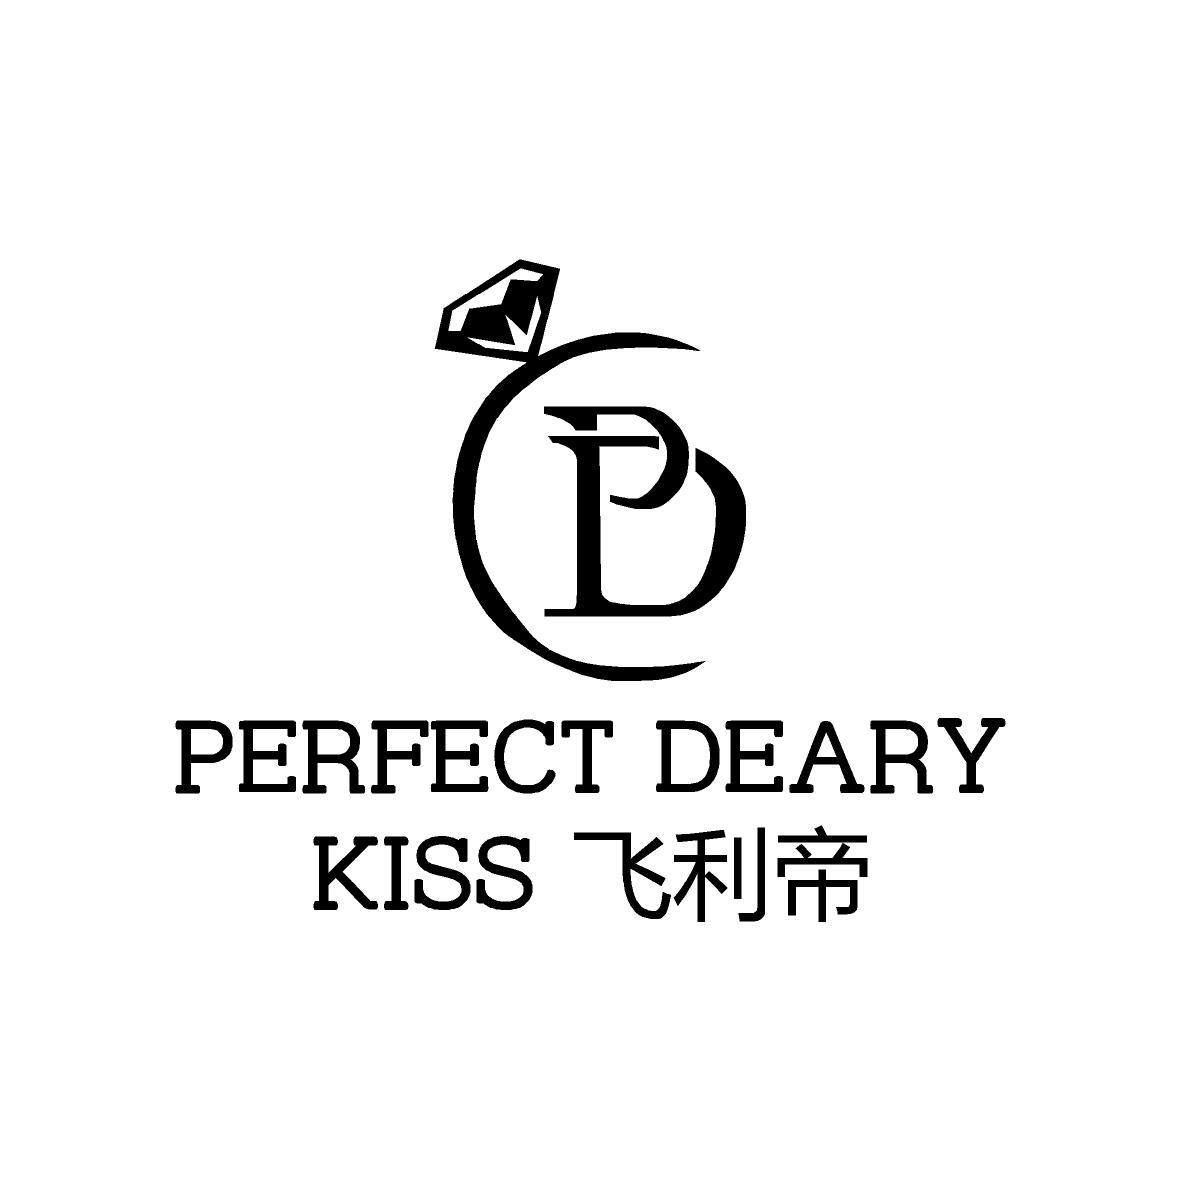  PERFECT DEARY KISS CD